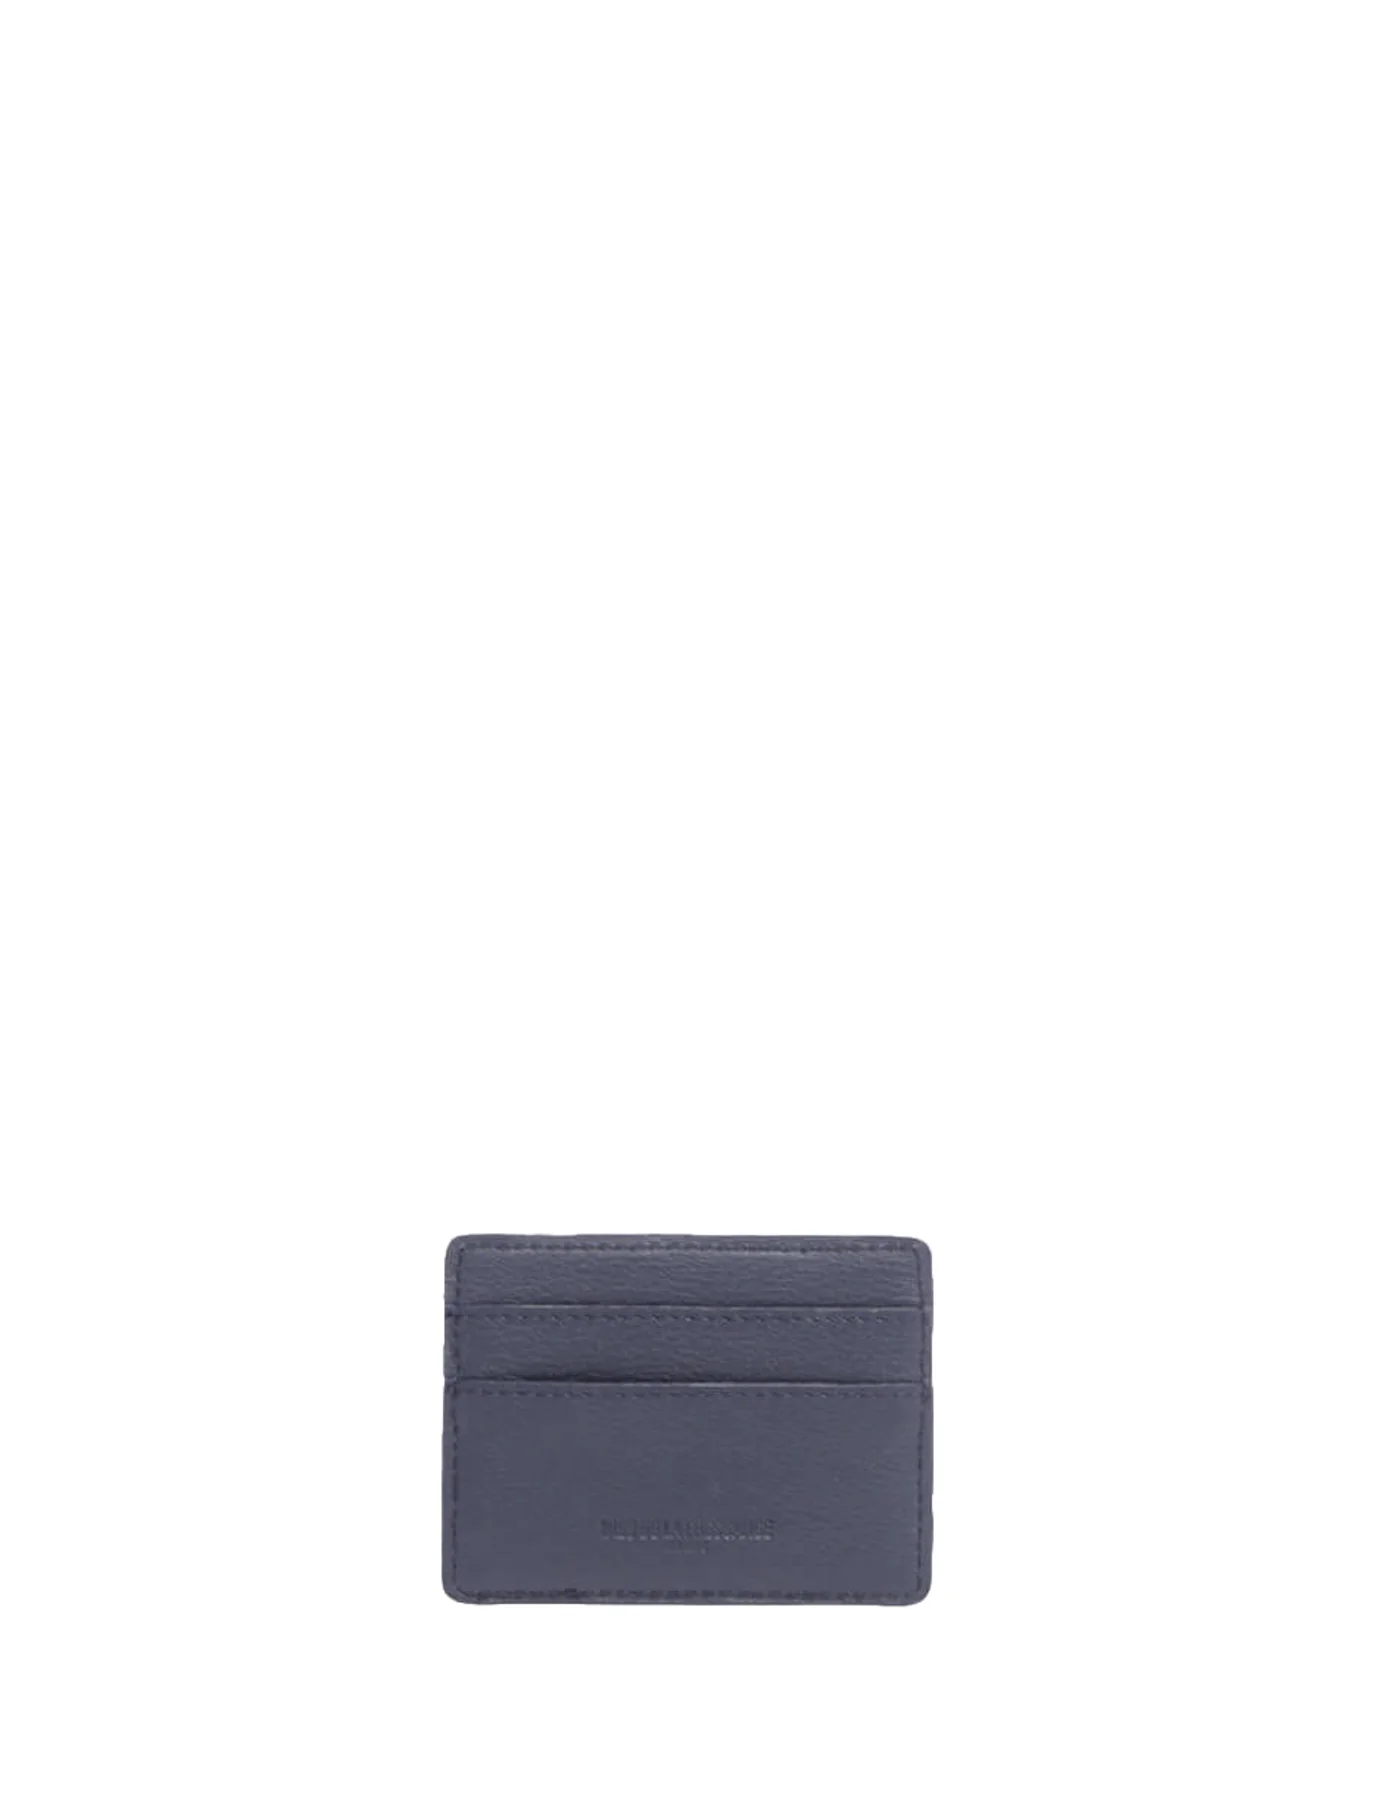 cardholder-the-parisian-leather-marine-simple